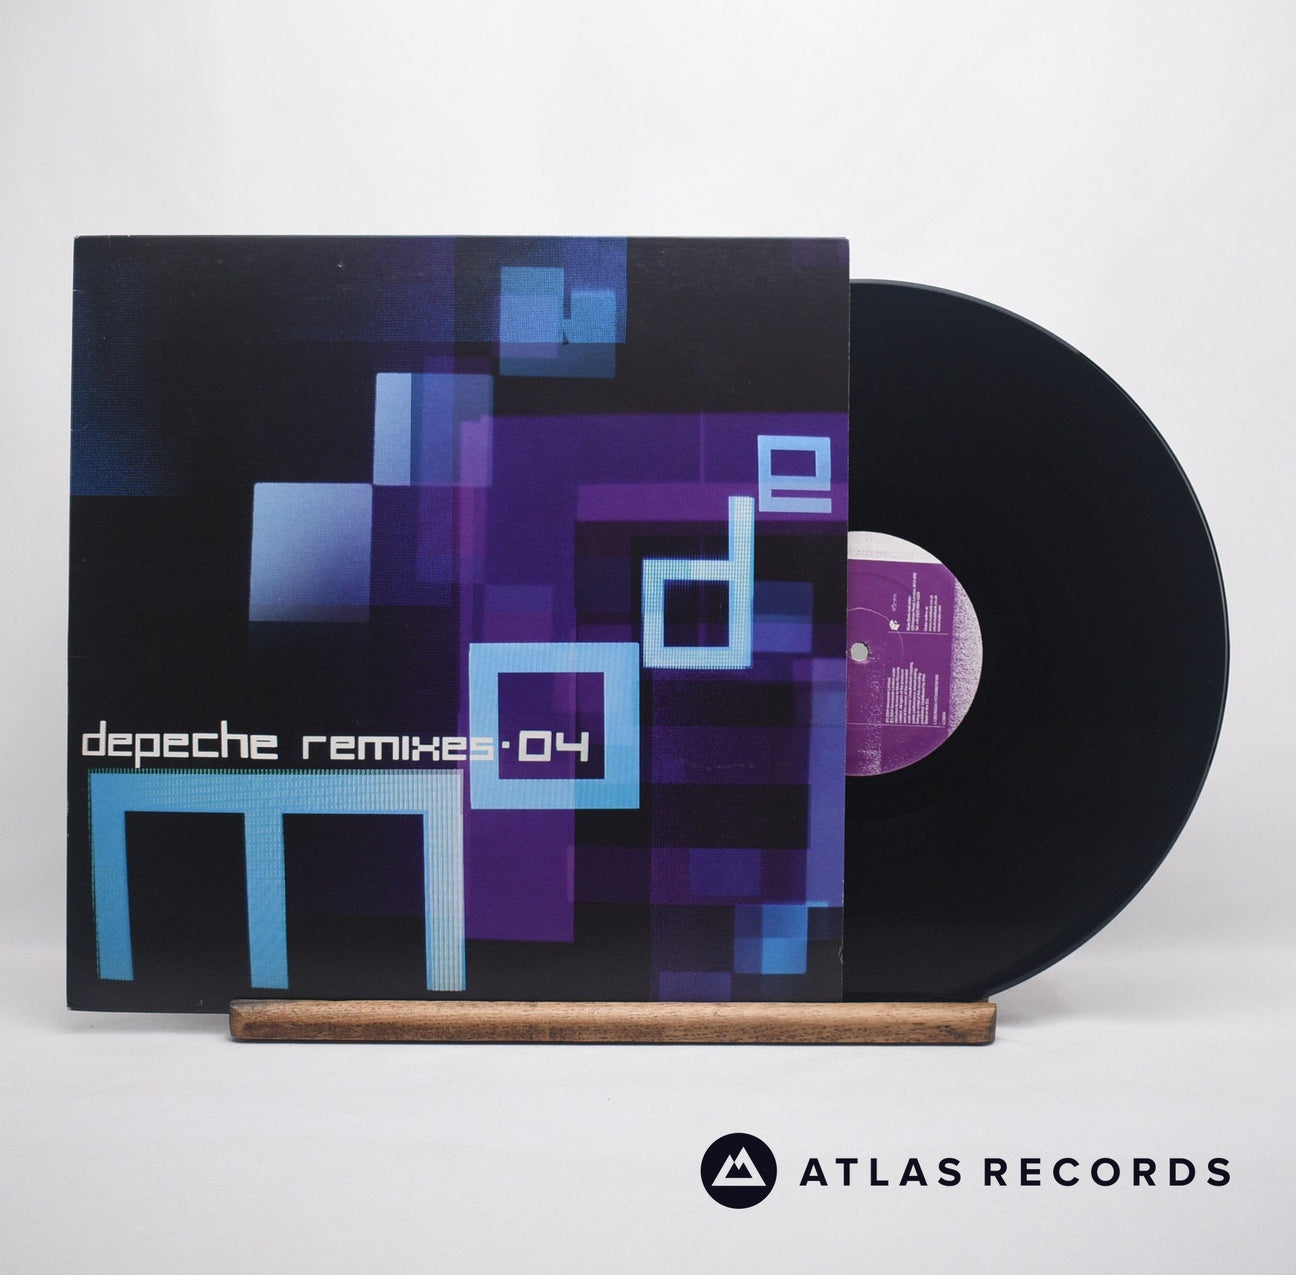 Depeche Mode Remixes·04 12" Vinyl Record - Front Cover & Record